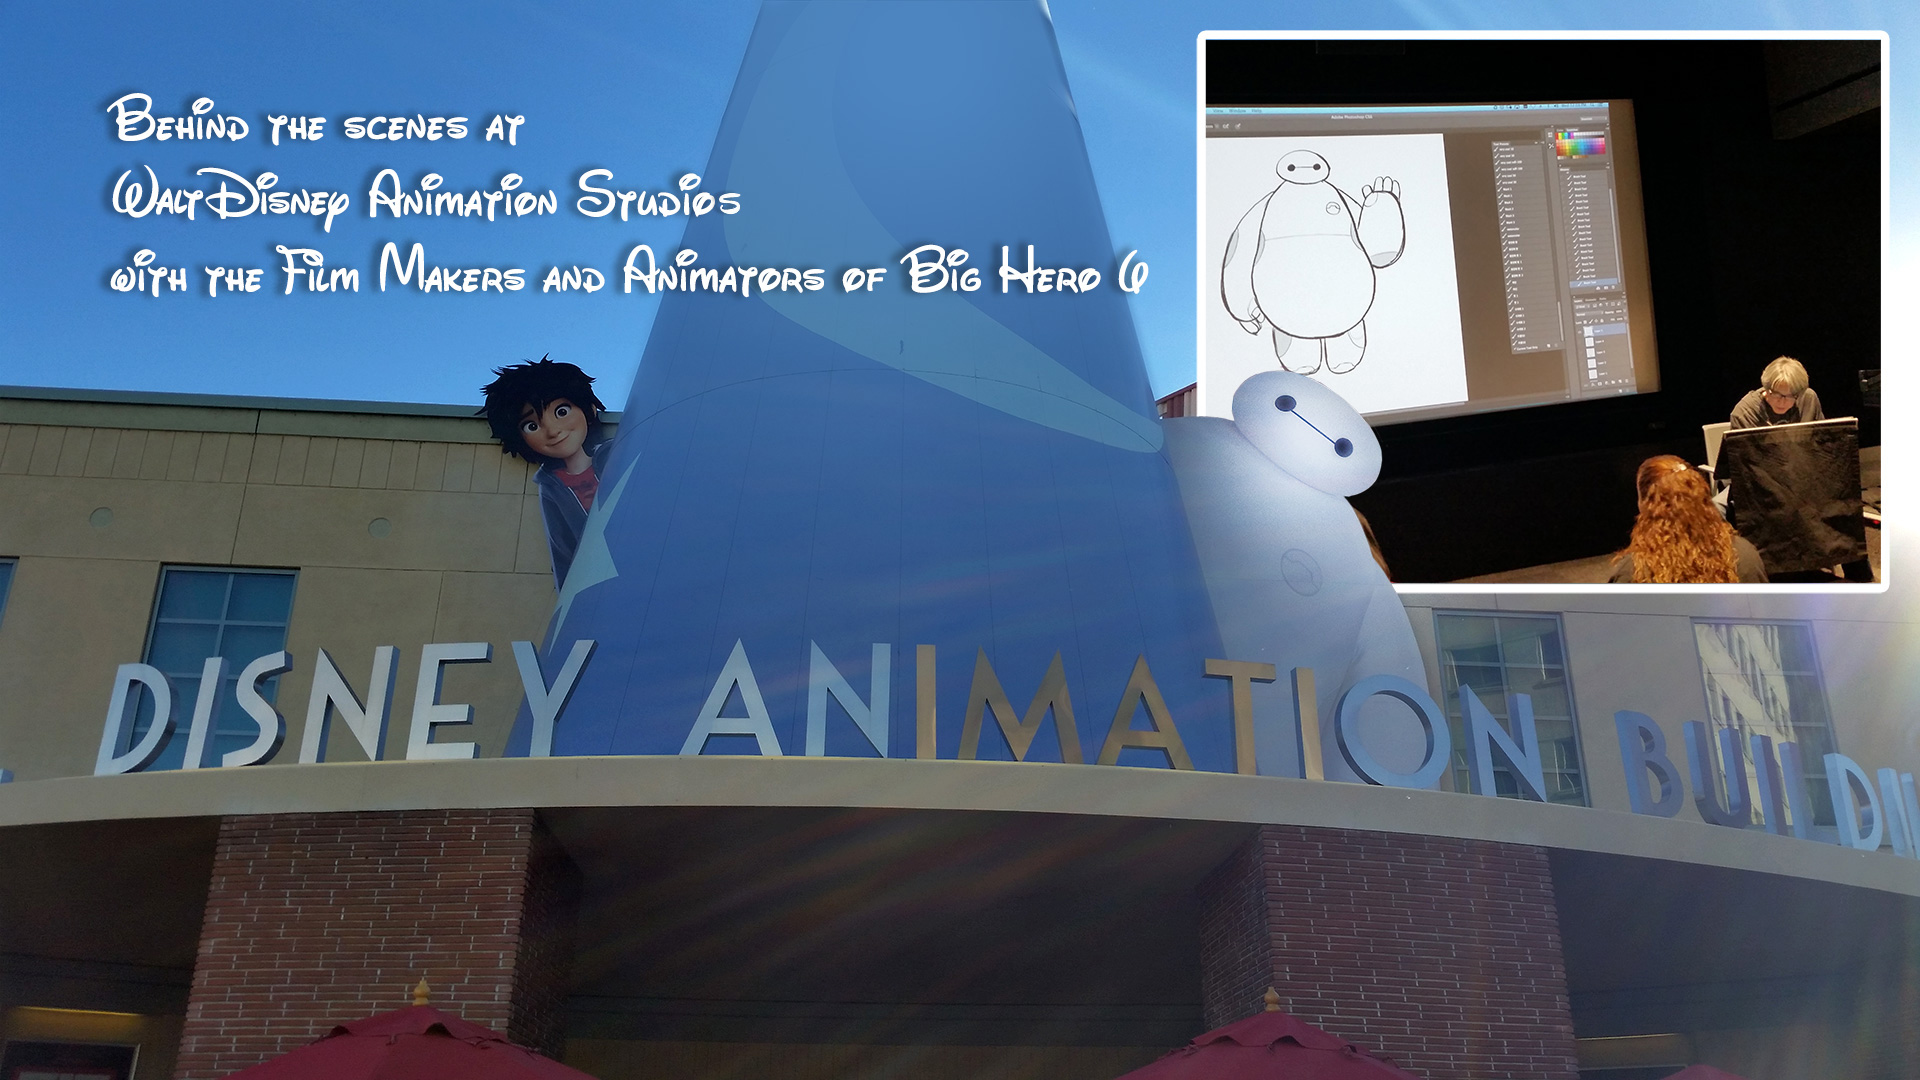 Behind the scenes at Walt Disney Animation Studios